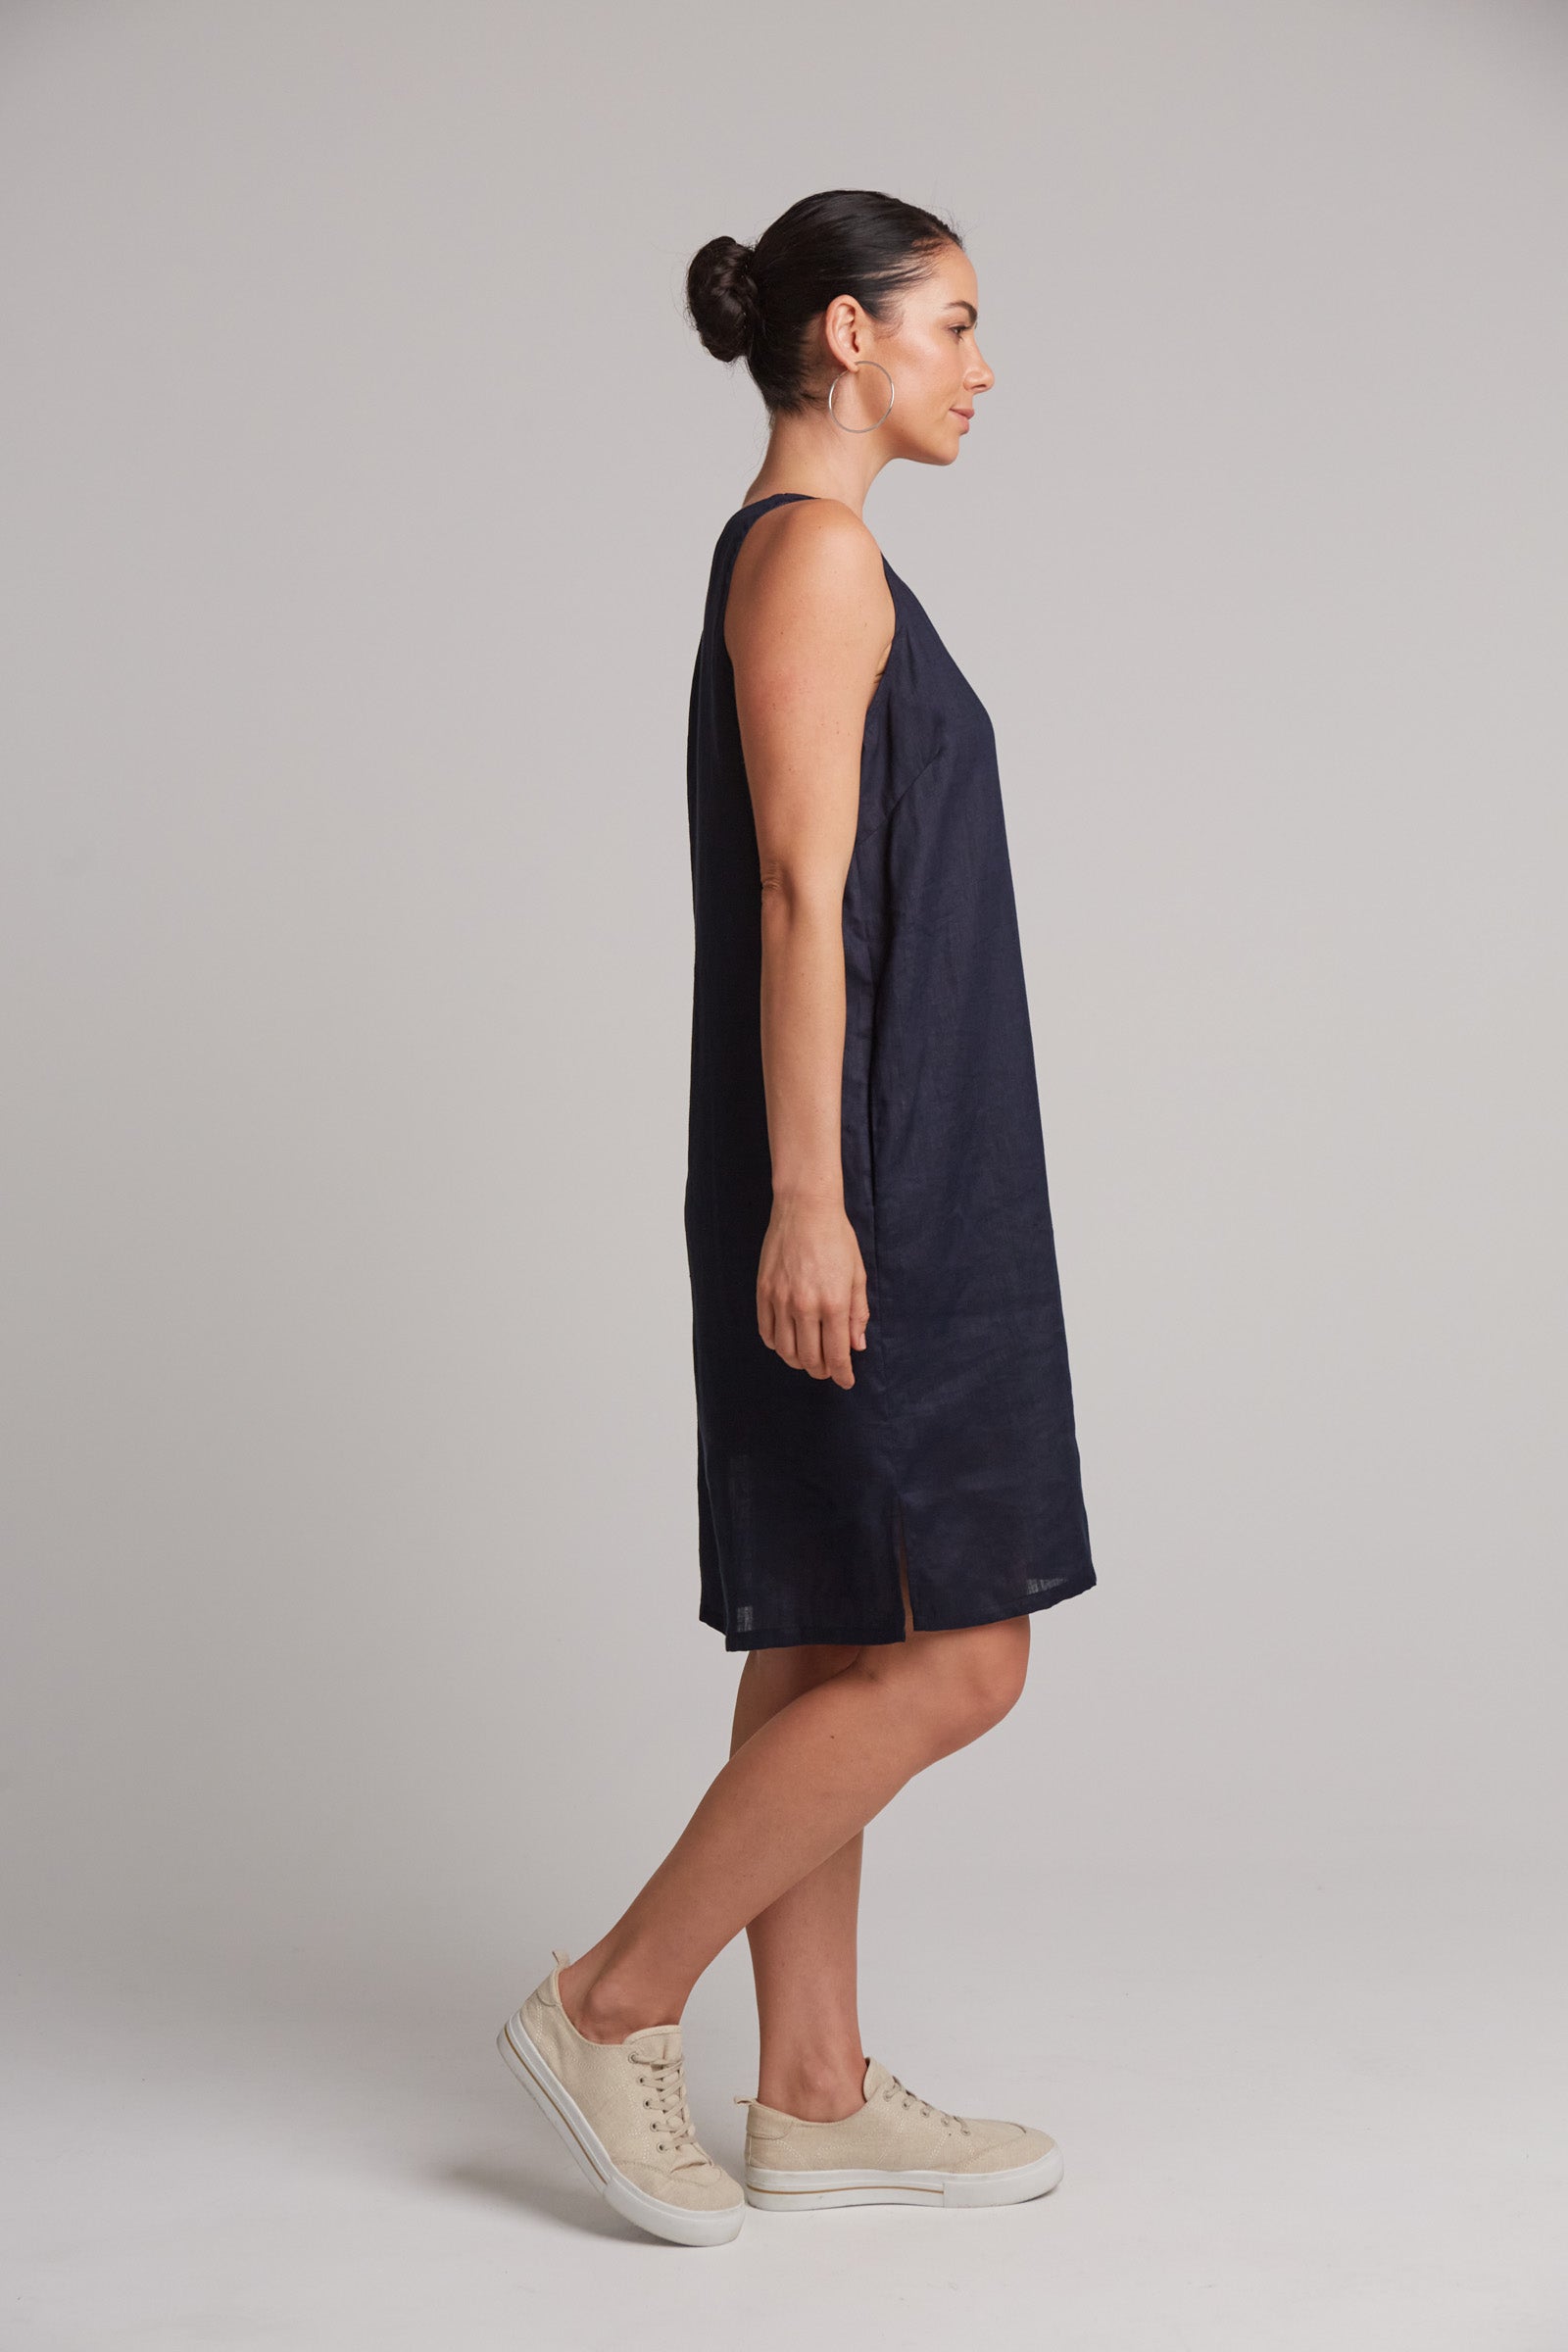 Studio Midi Dress - Navy - eb&ive Clothing - Dress Mid Linen